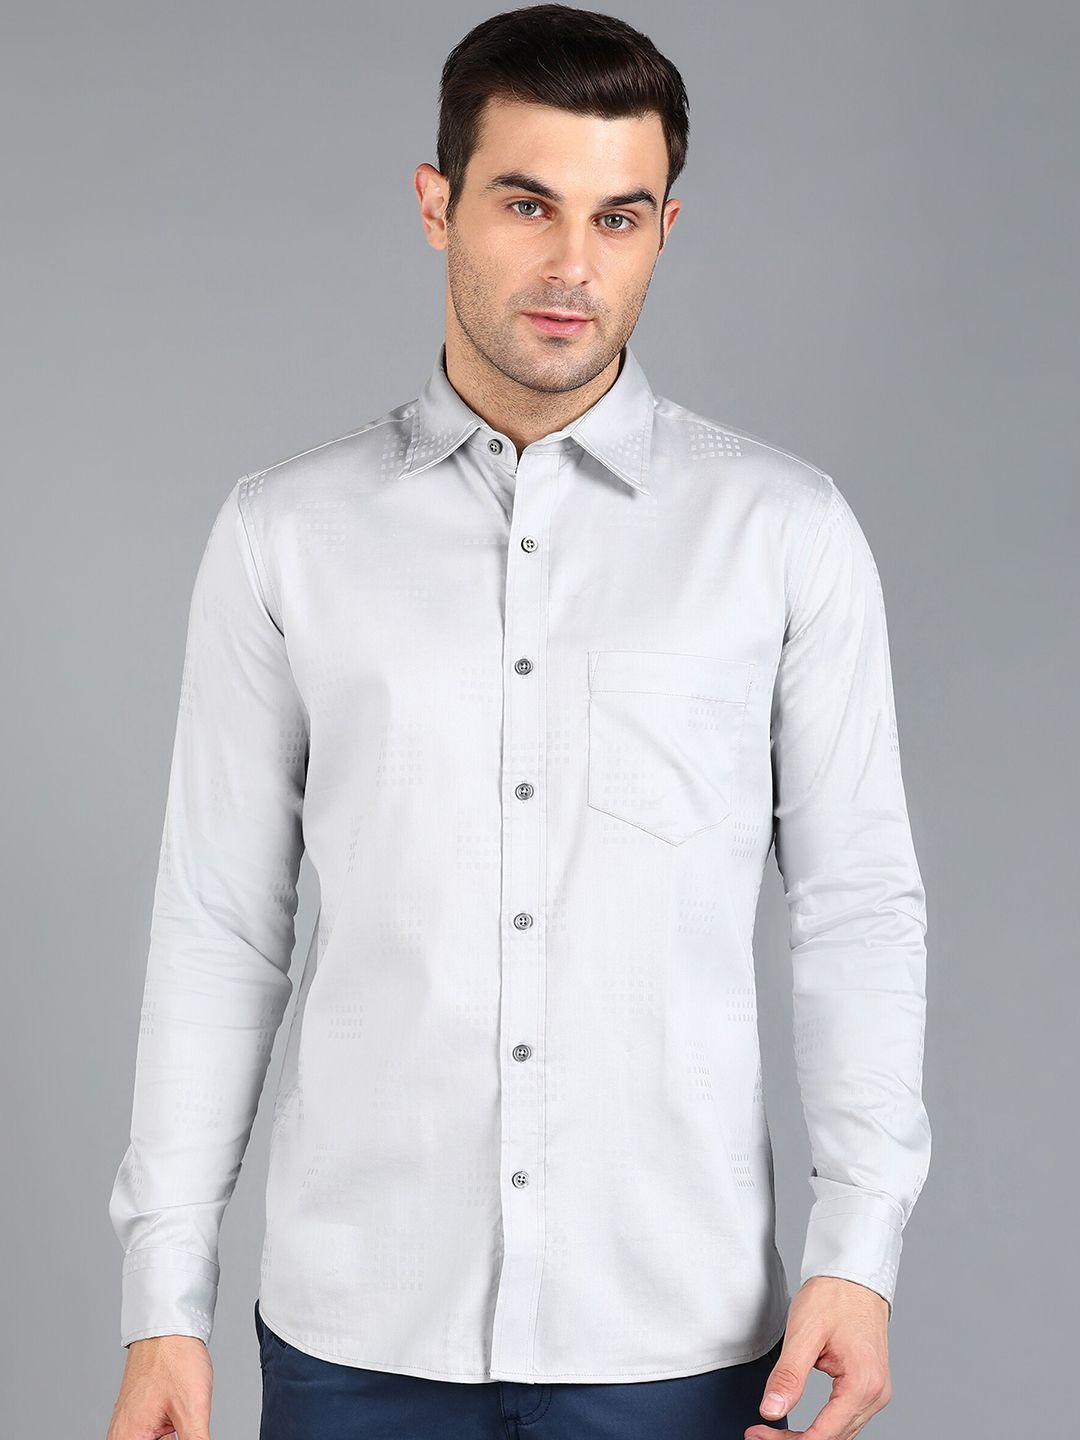 znx-clothing-men-grey-premium-slim-fit-opaque-formal-shirt